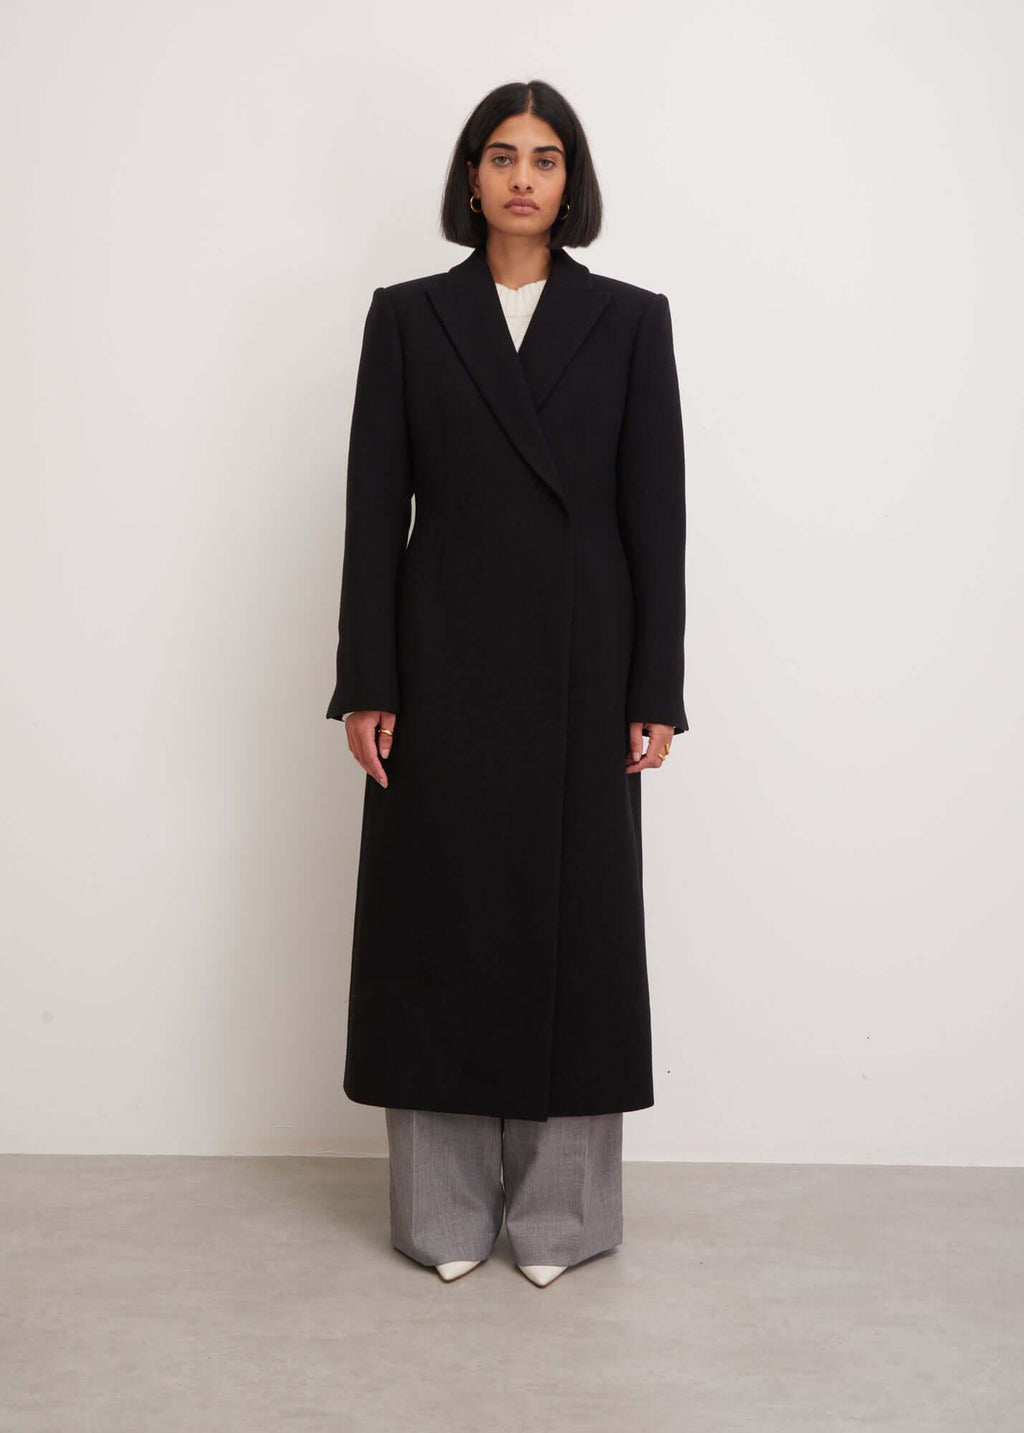 Tailored Coat in Black Wool | Elegant Outerwear | SONI London - Soni London